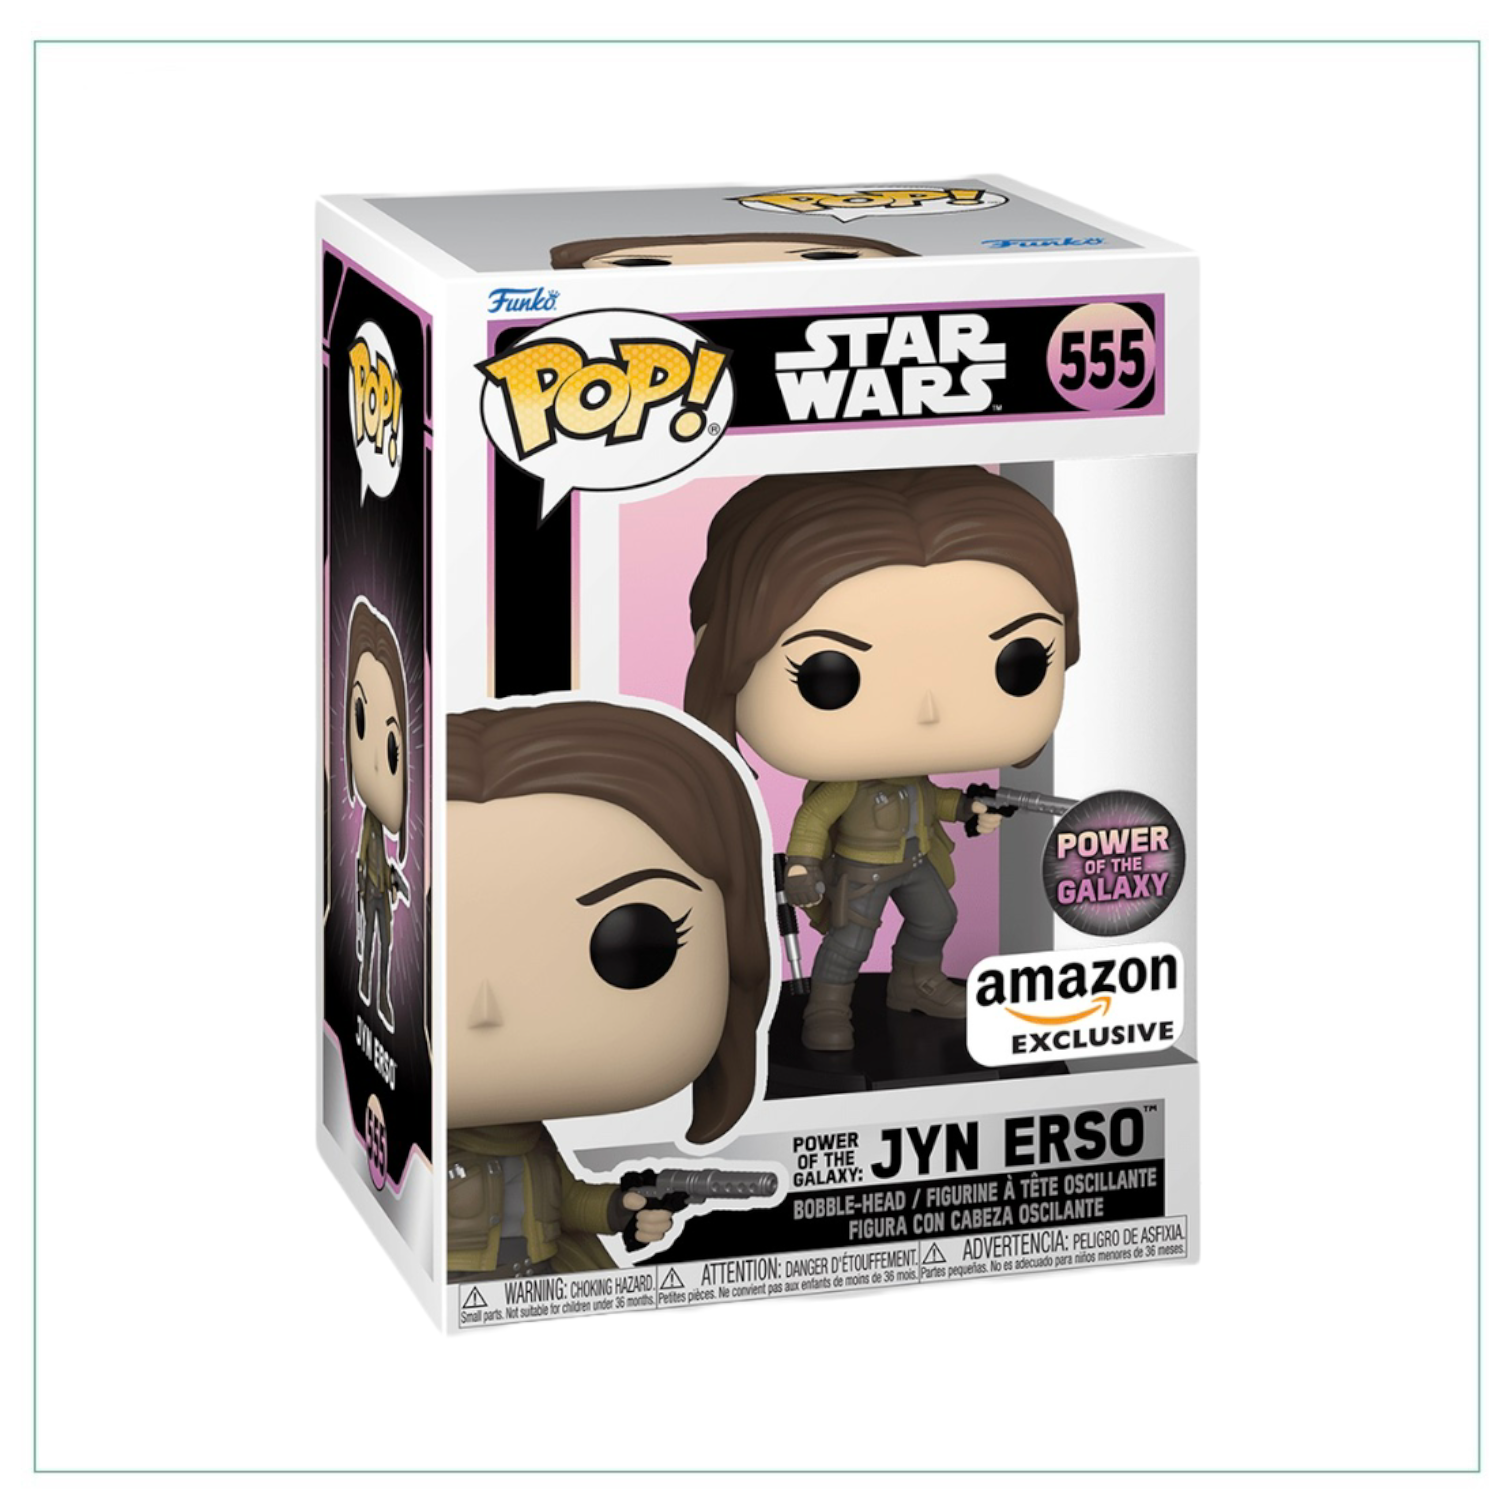 Jyn Erso #555 Funko Pop! Power of the Galaxy Star Wars - Amazon Exclusive